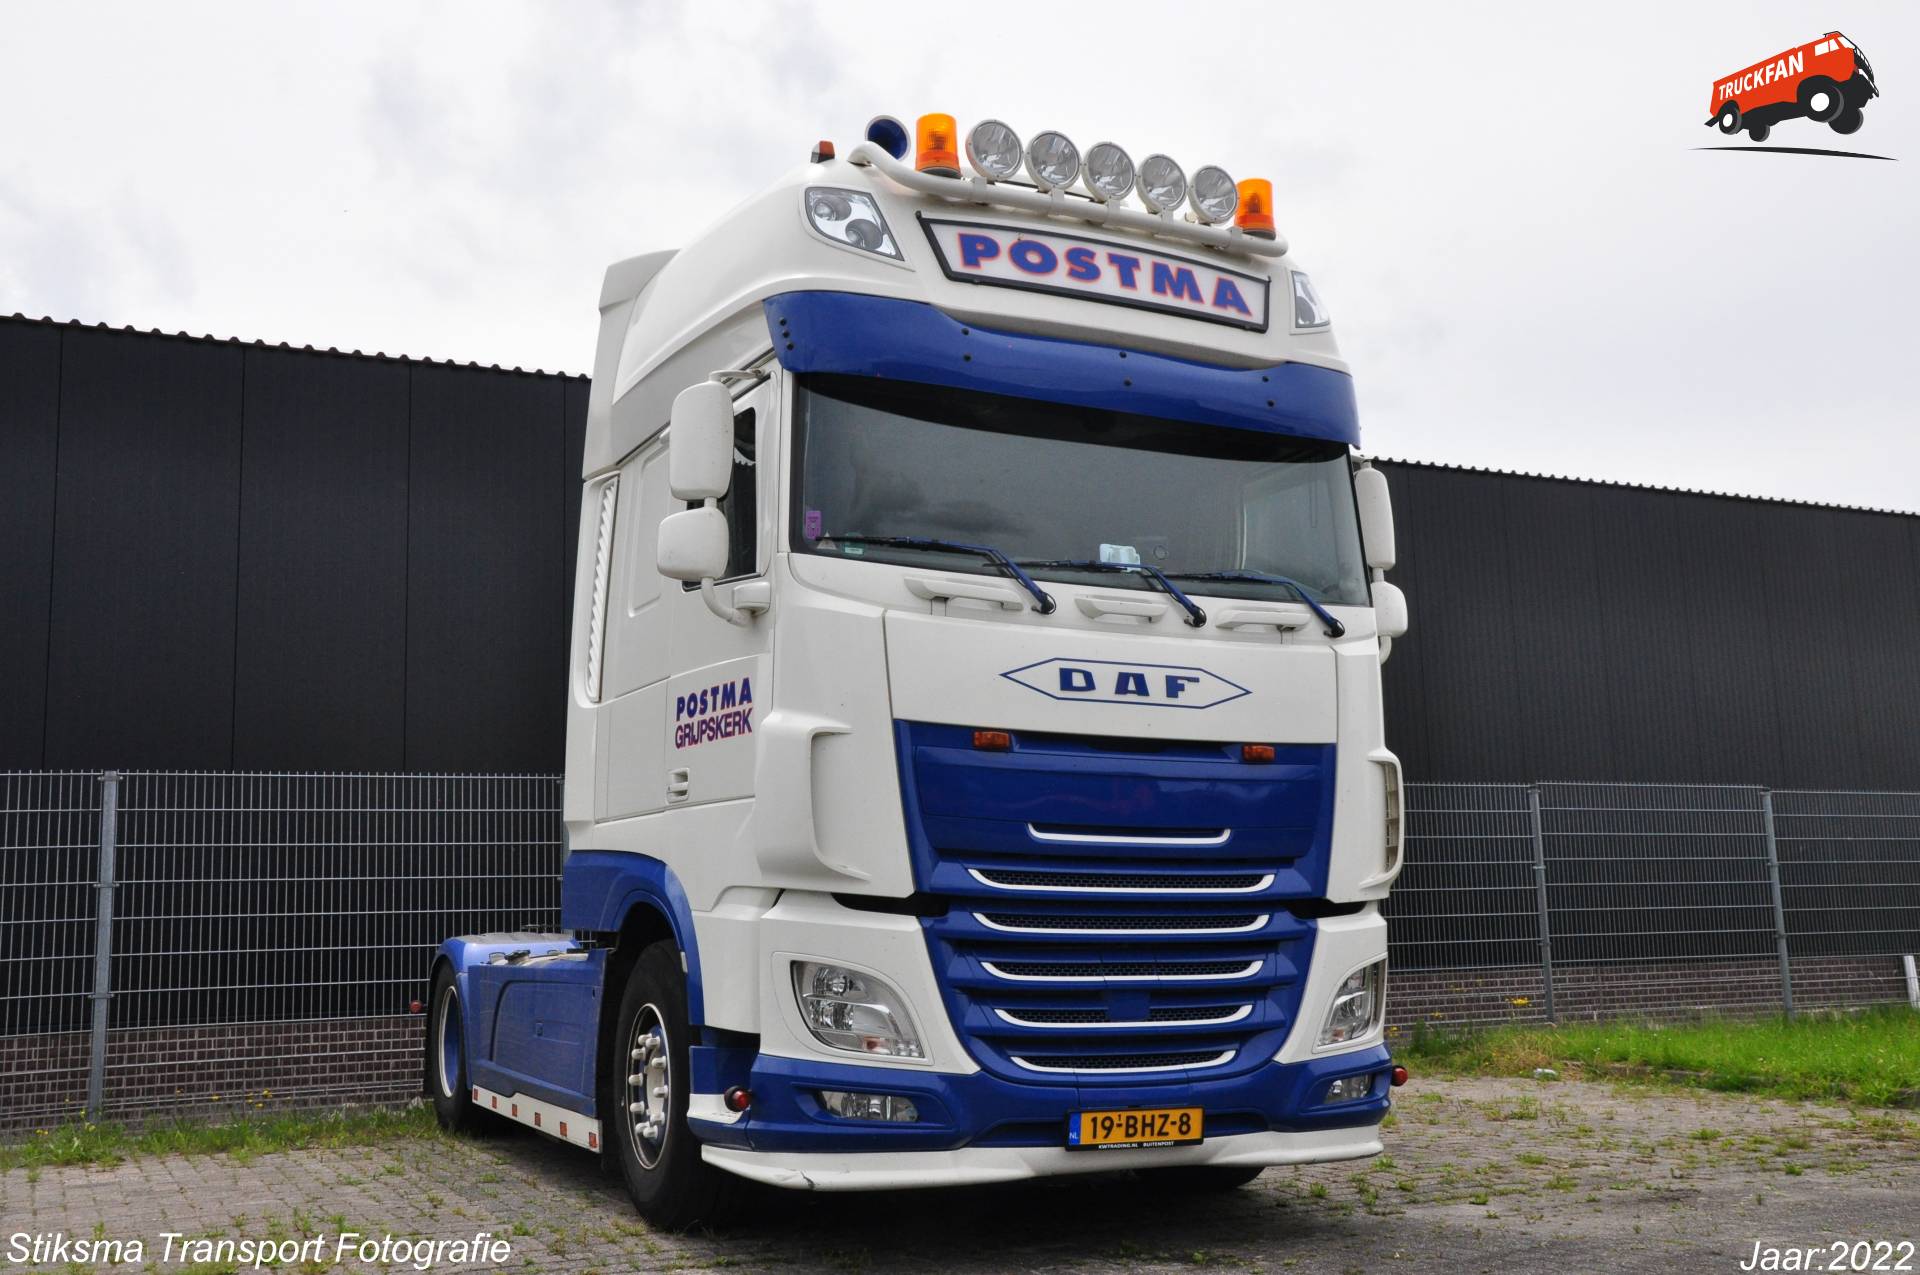 Foto Daf Xf Van Transportonderneming Postma Grijpskerk Truckfan